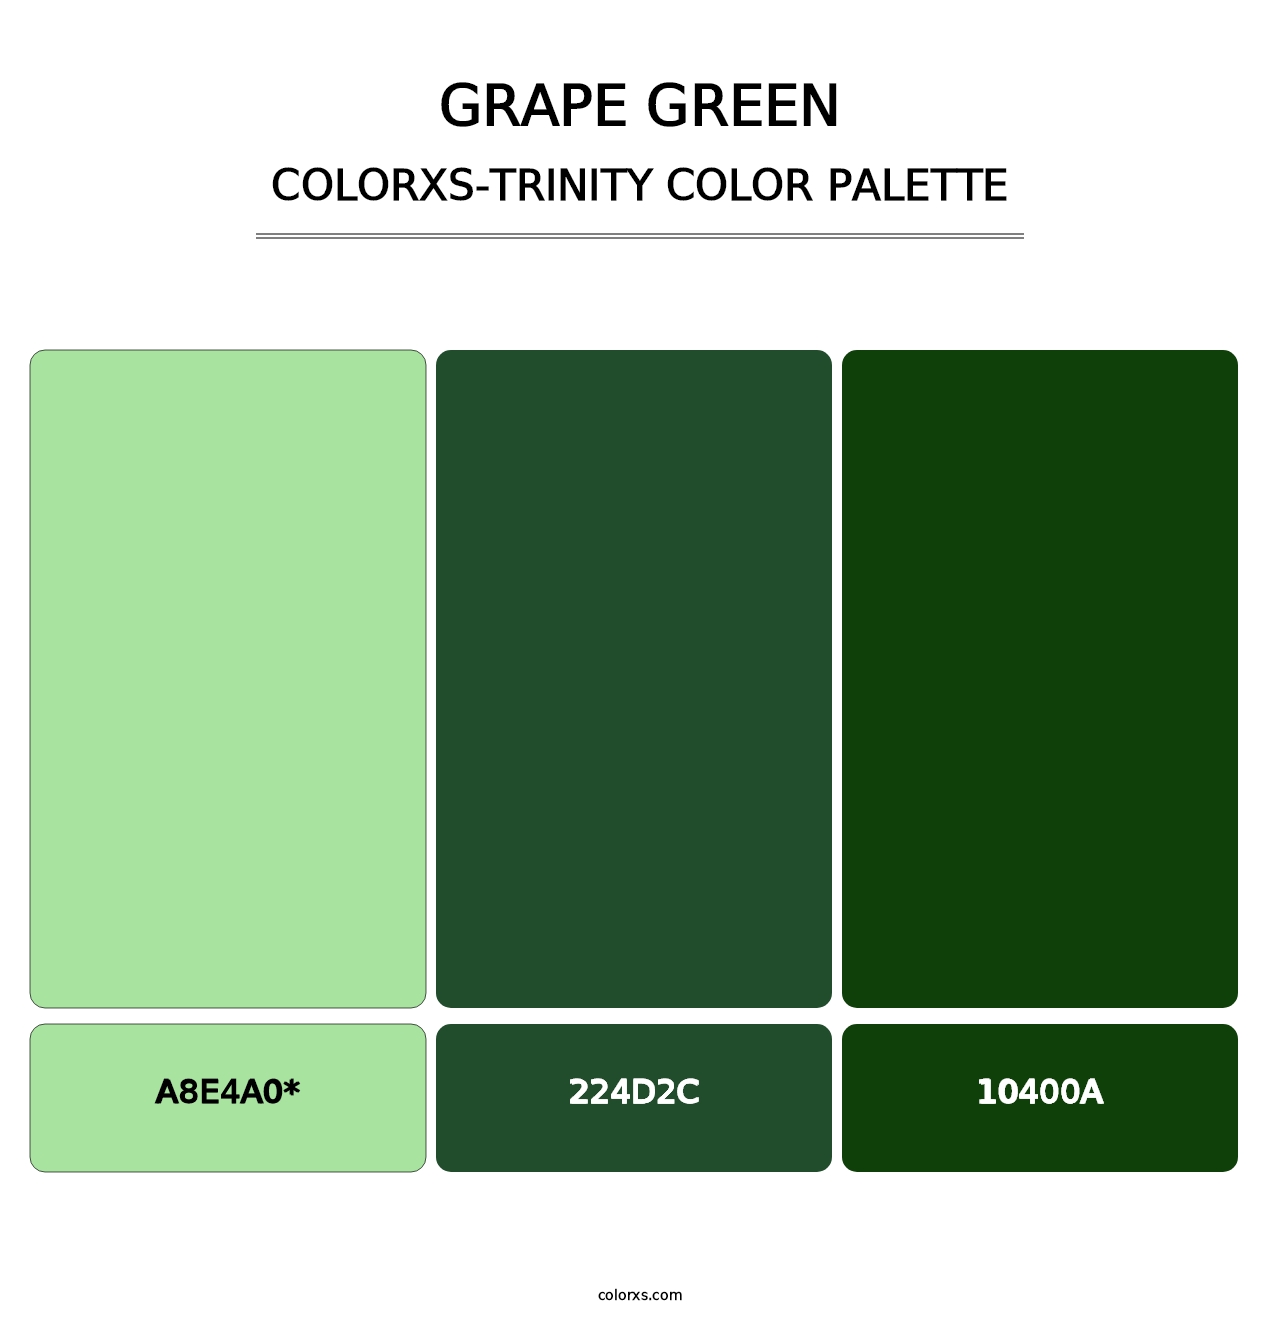 Grape Green - Colorxs Trinity Palette